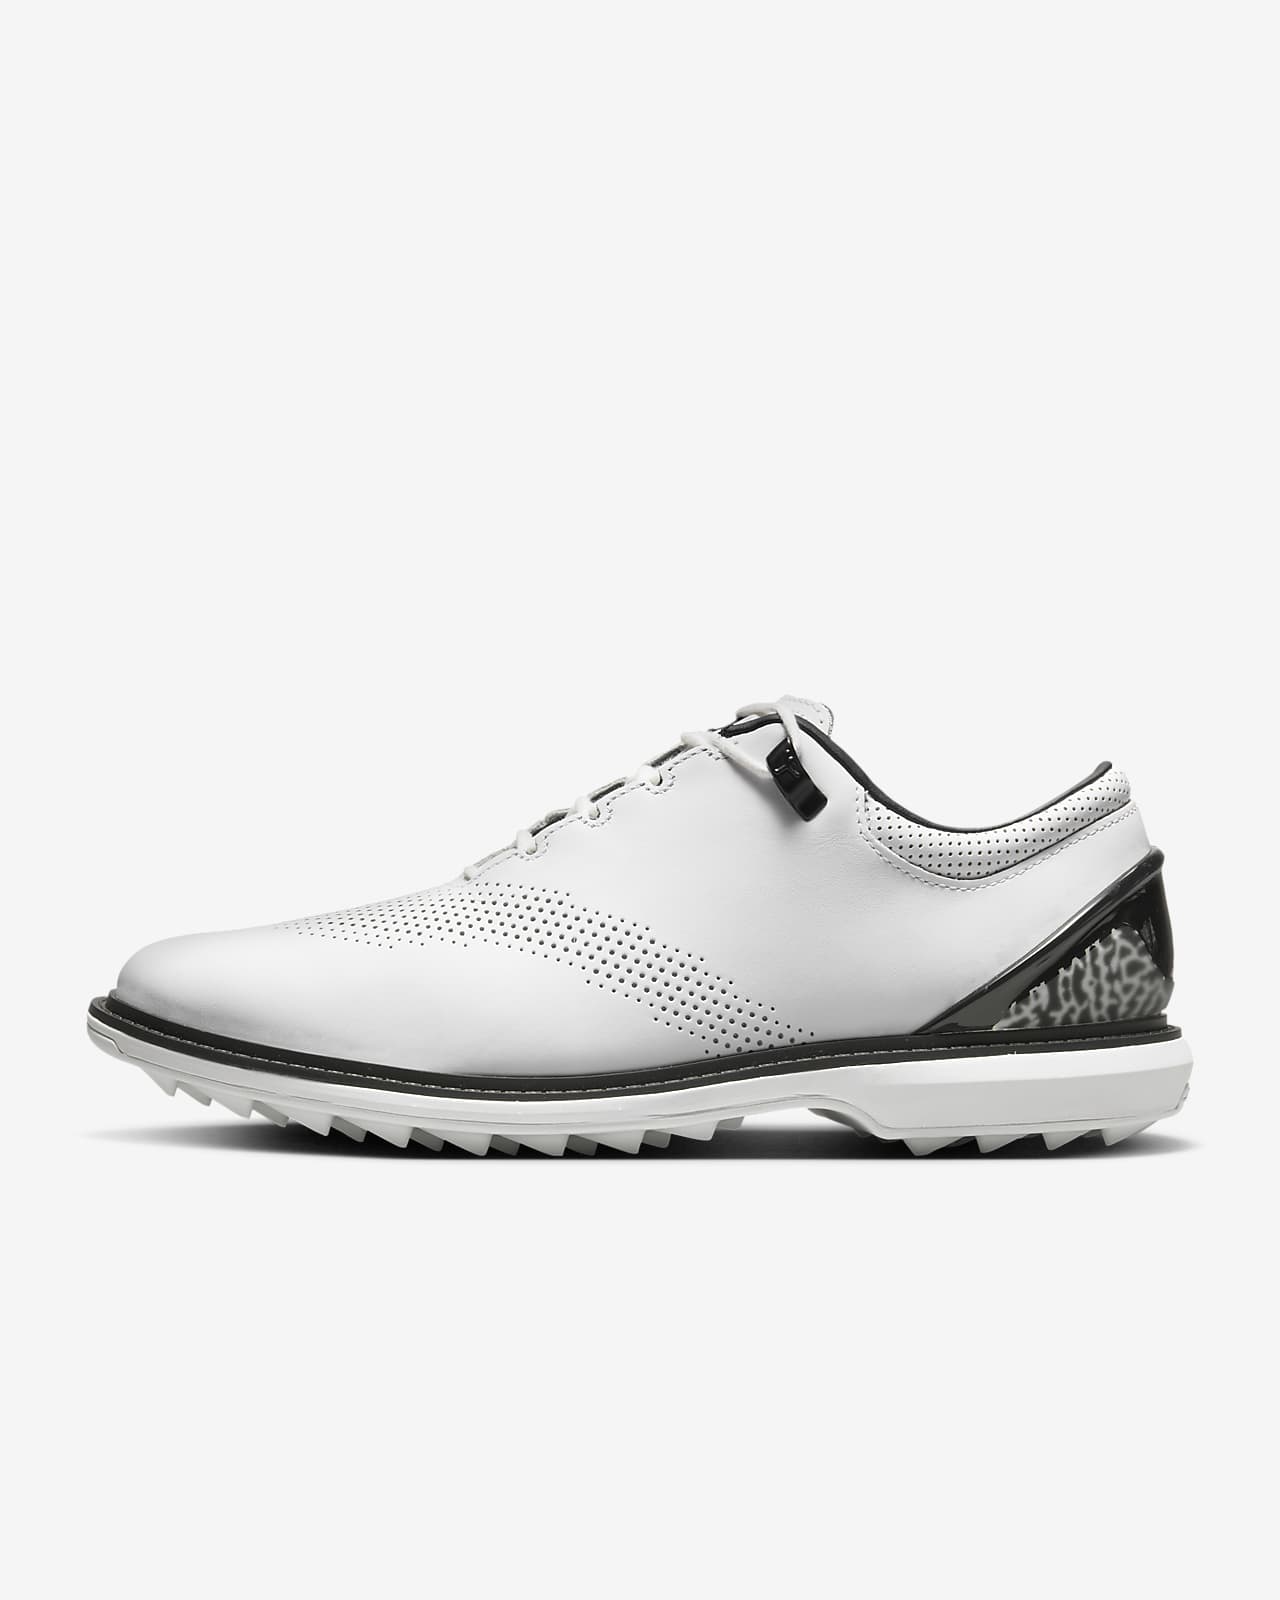 Jordan ADG 4 Men's Golf Shoes - 1